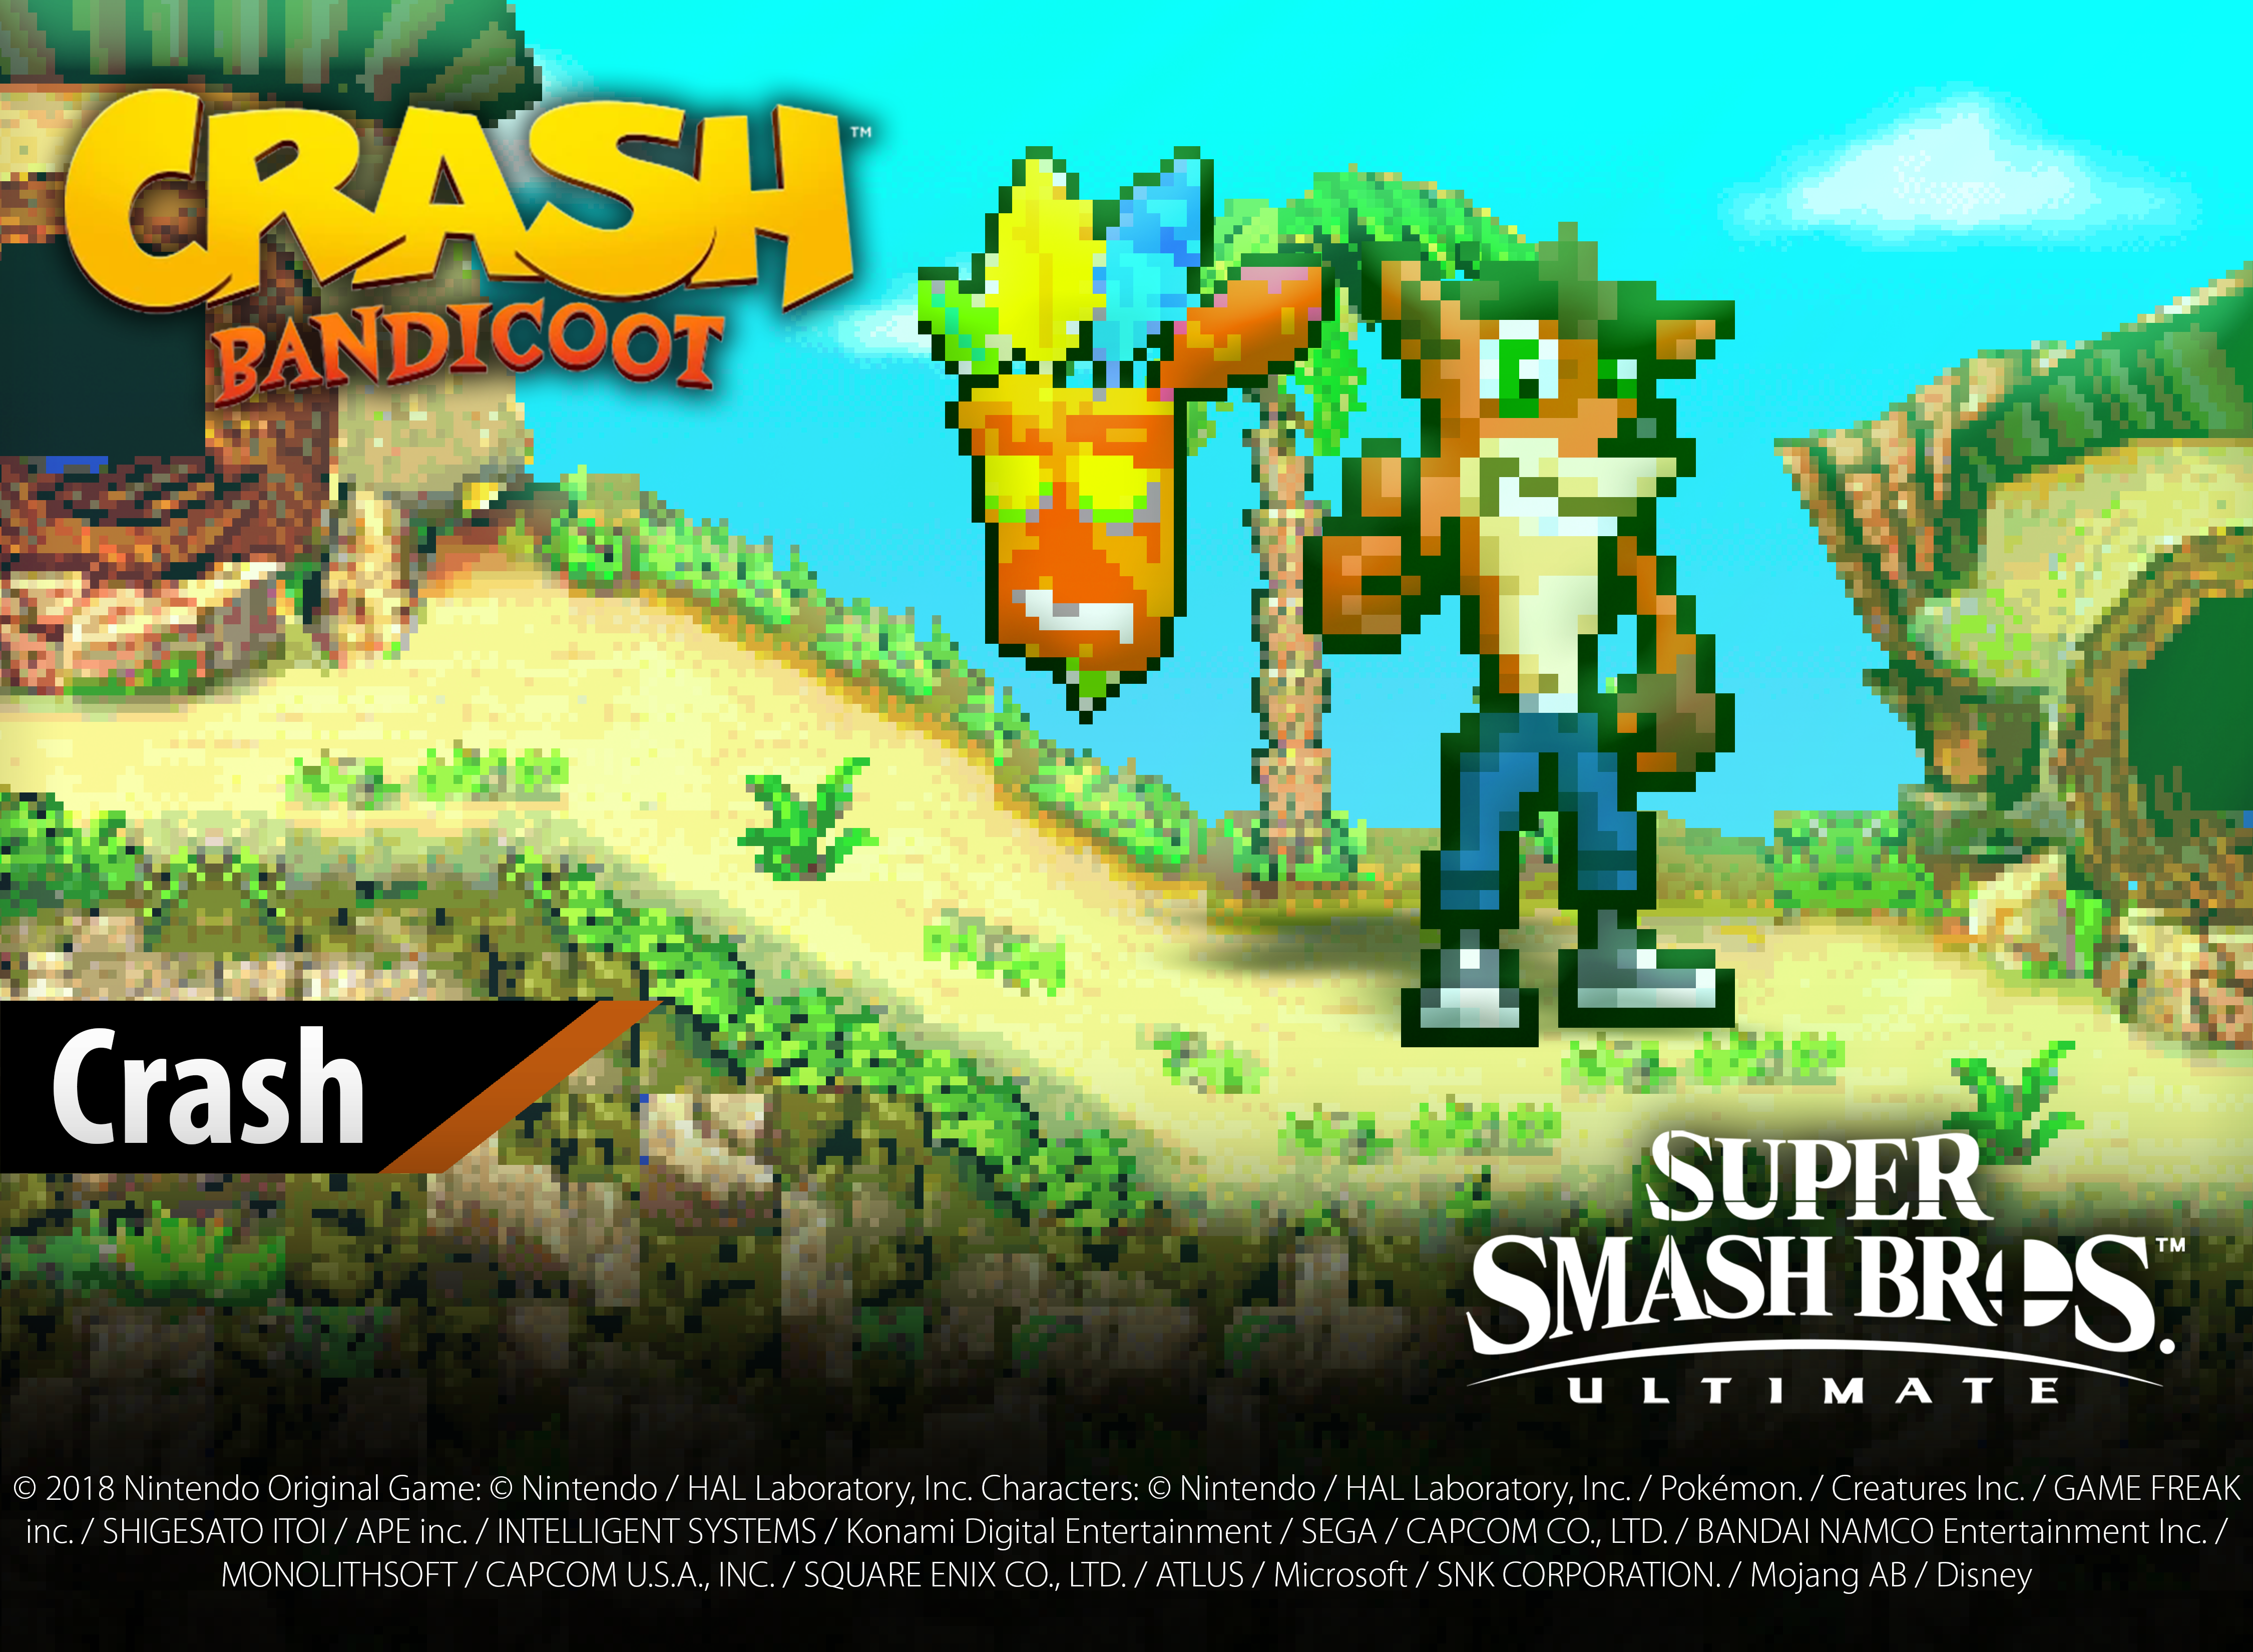 Crash Bandicoot in Smash on E3 2021.